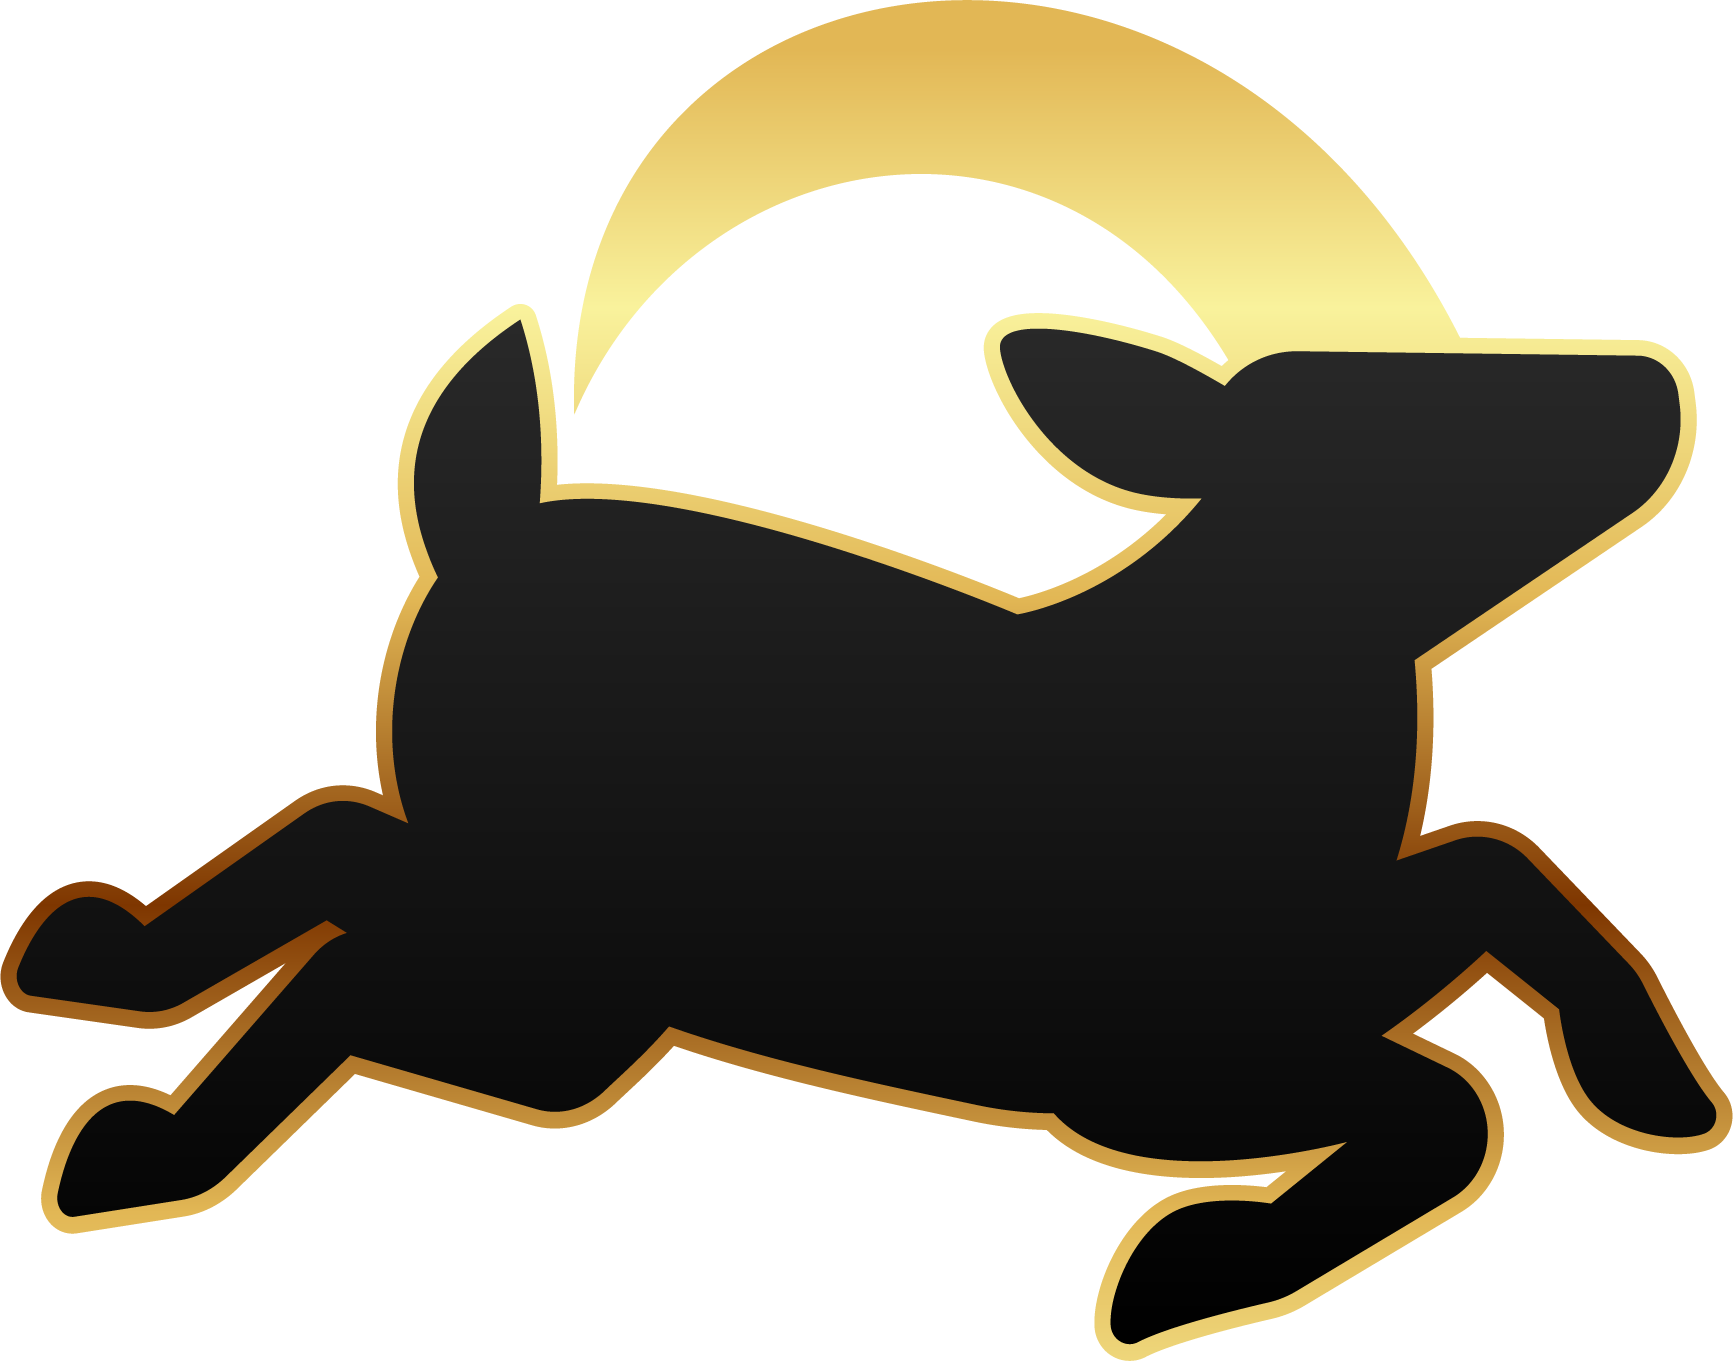 GoldenHorn logo